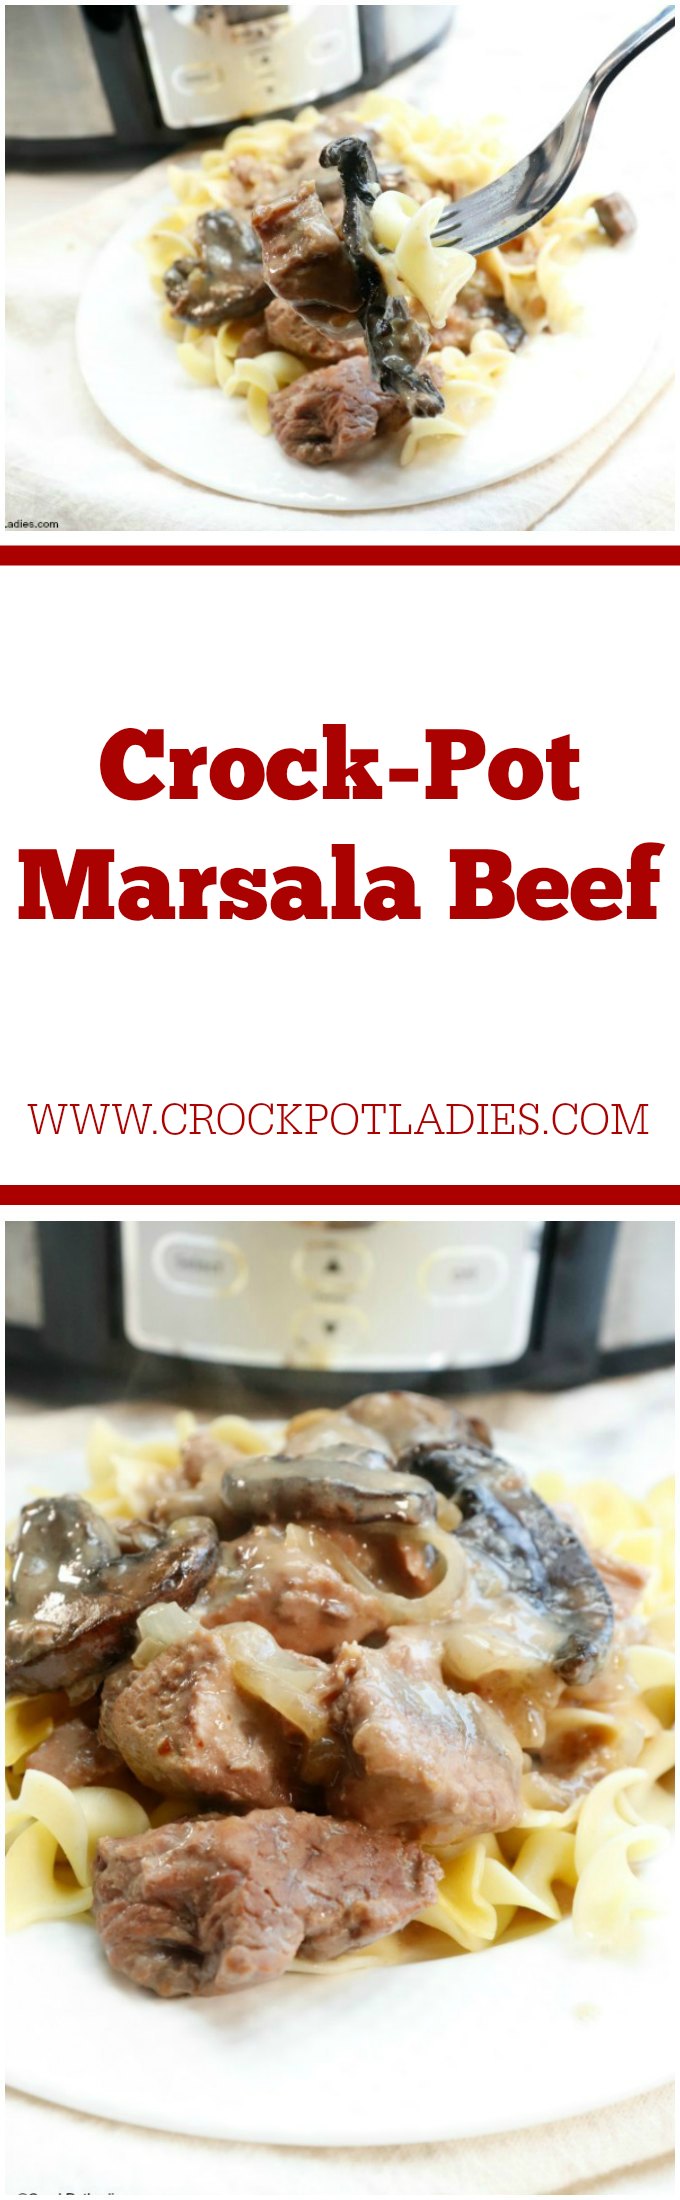 Crock-Pot Marsala Beef